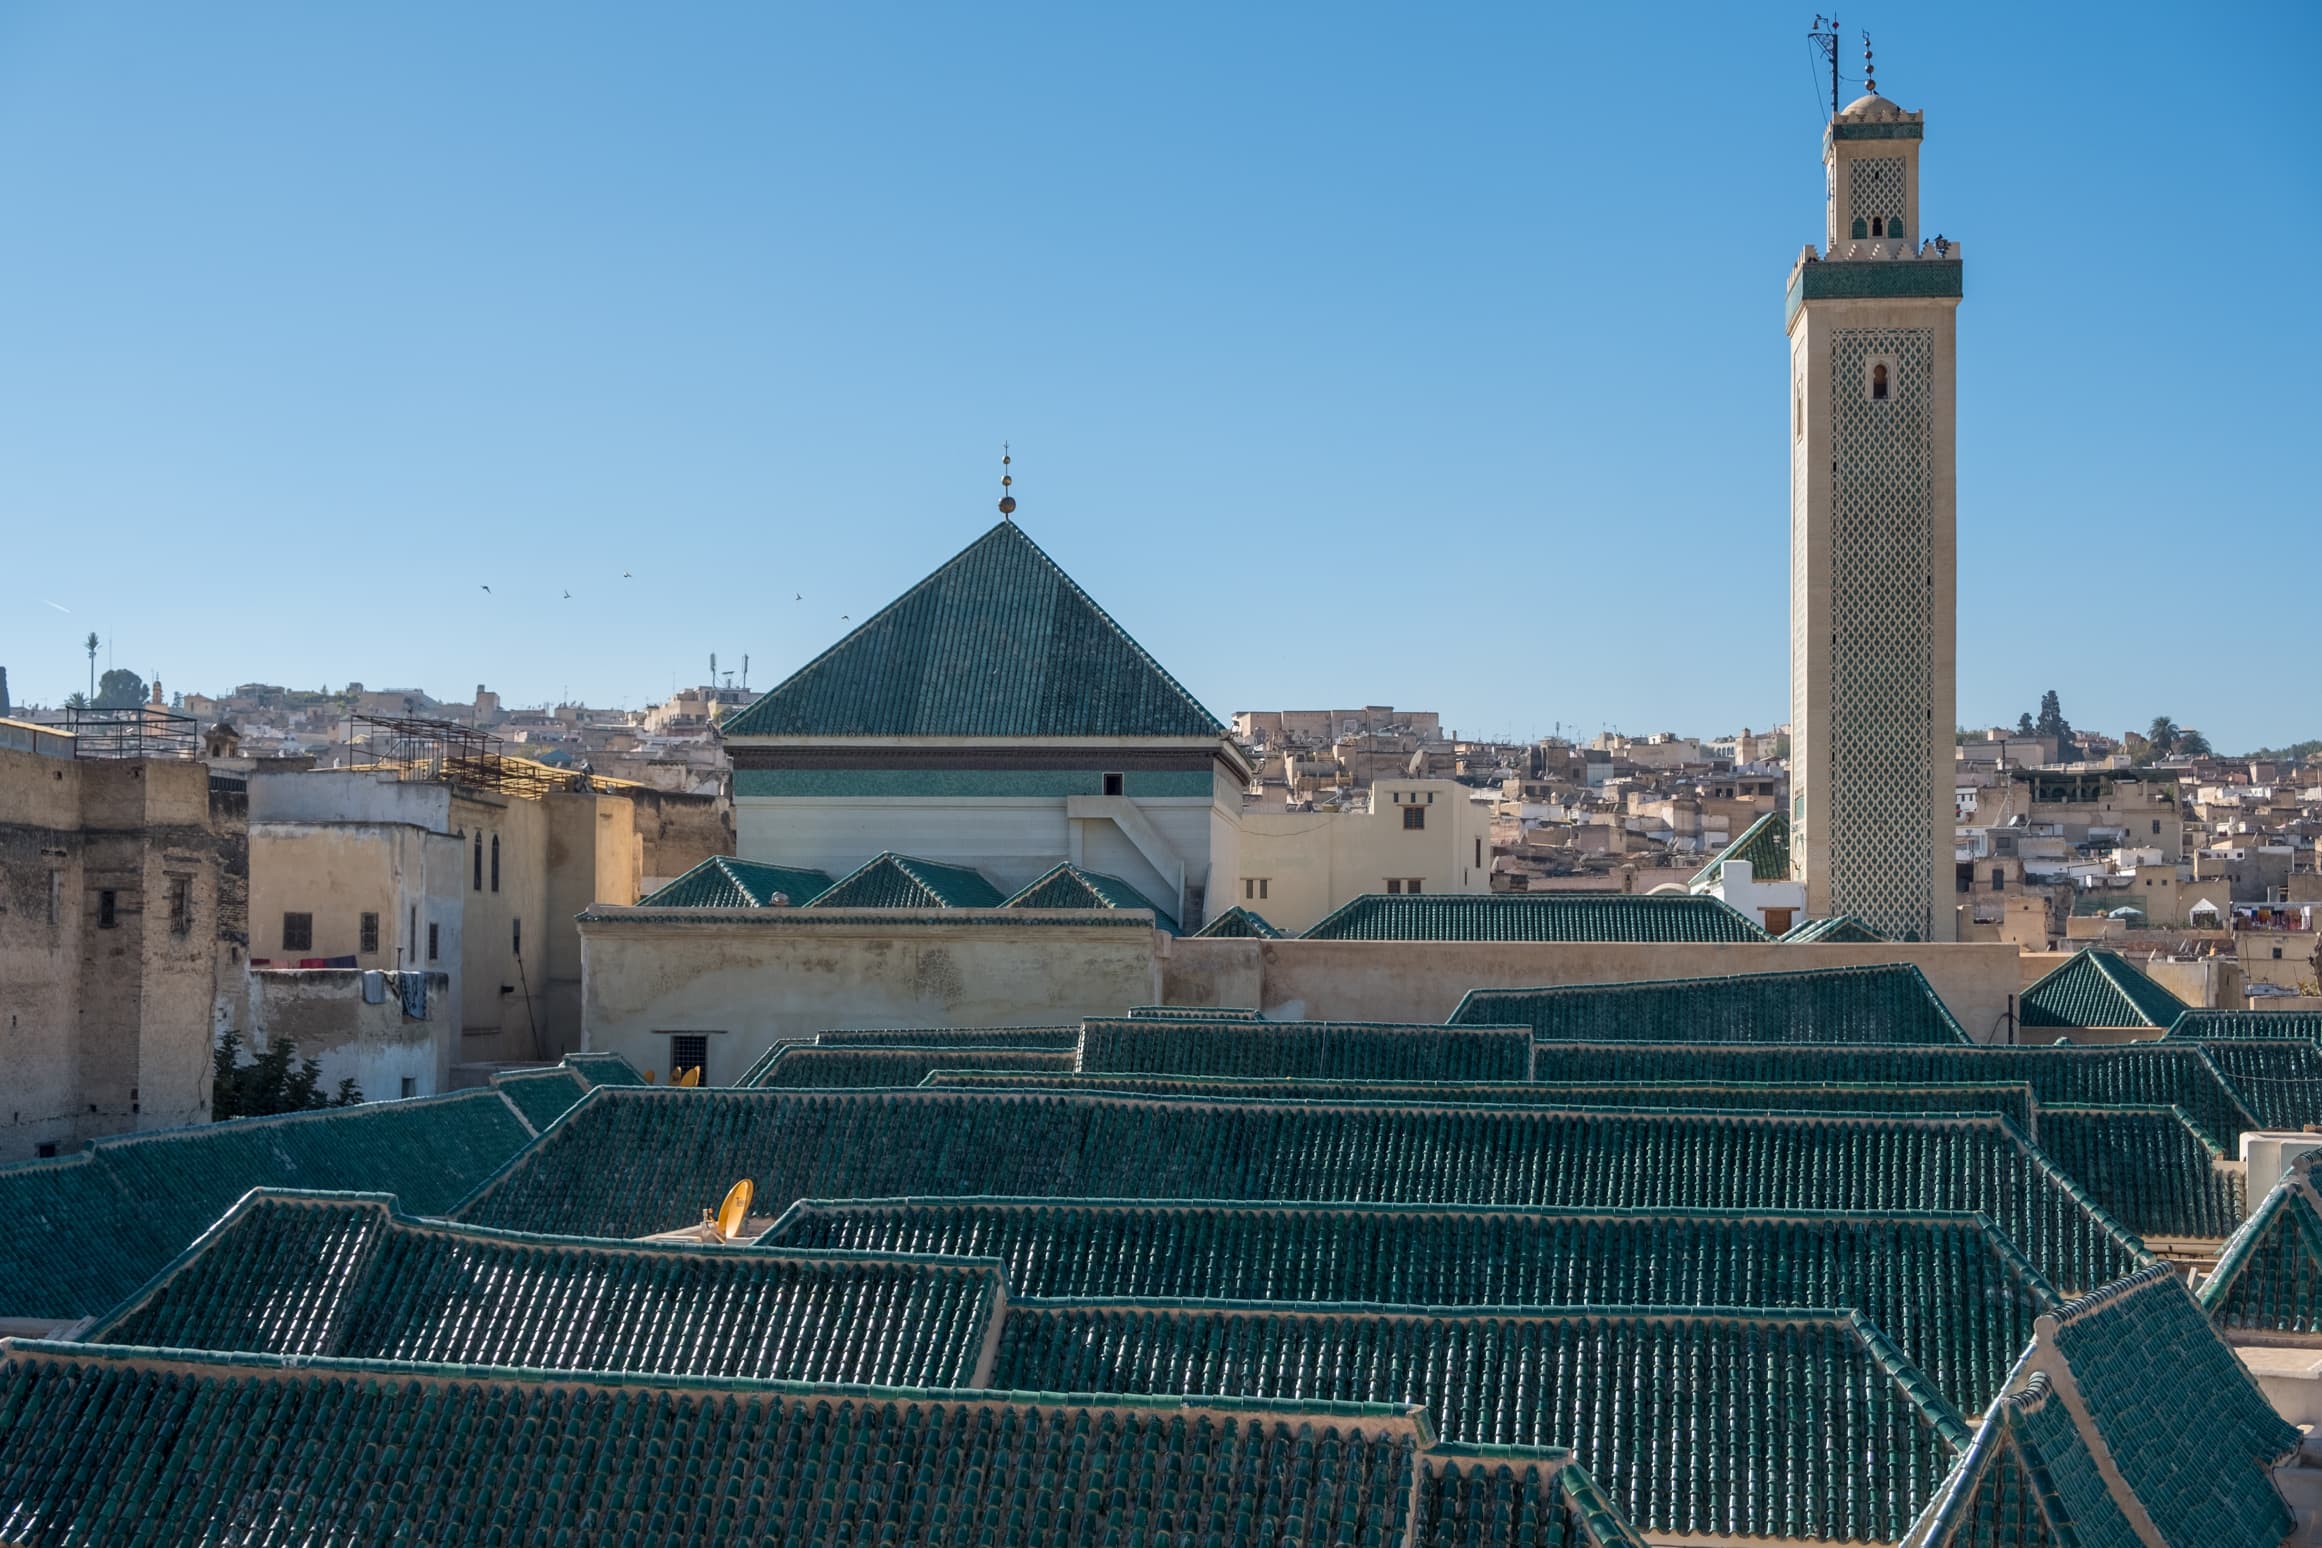 Green rooftops of the University of al-Qarawiyyin